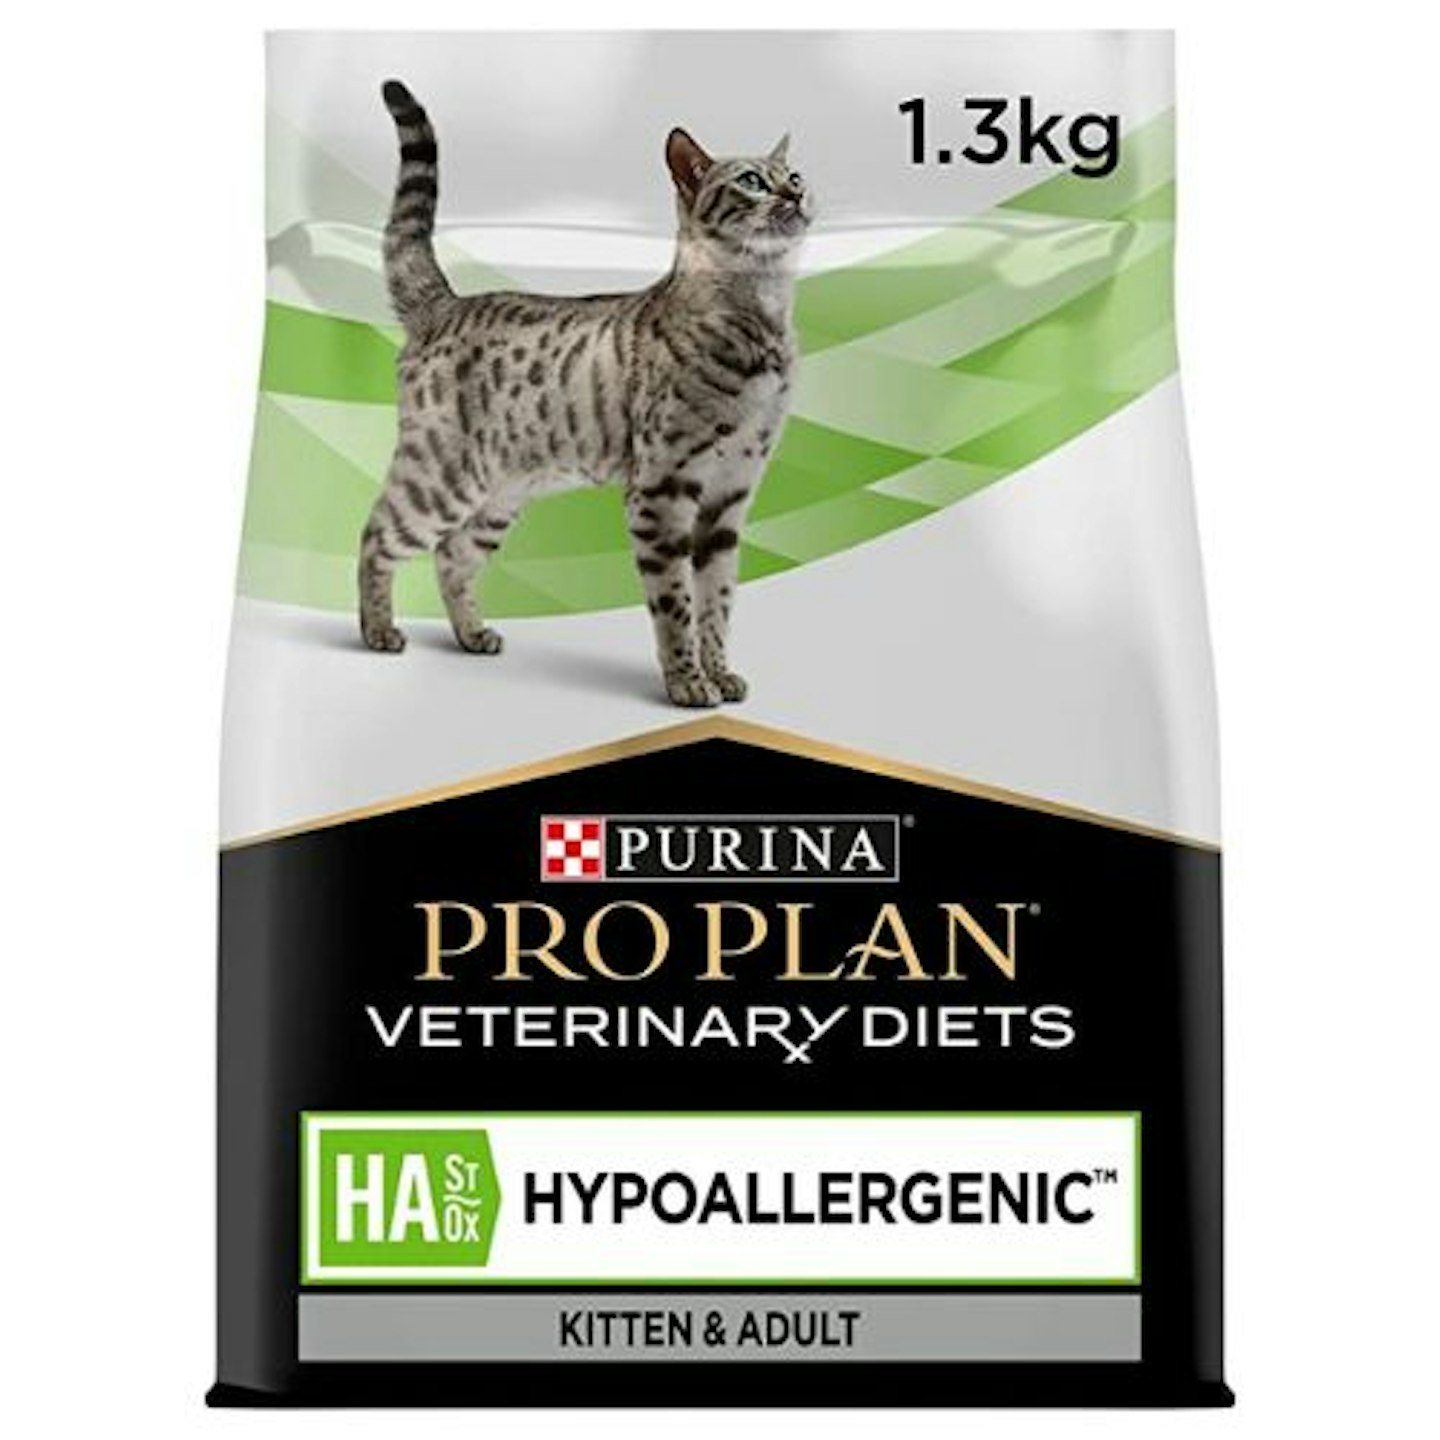 PRO PLAN VETERINARY DIETS Hypoallergenic Dry Cat Food